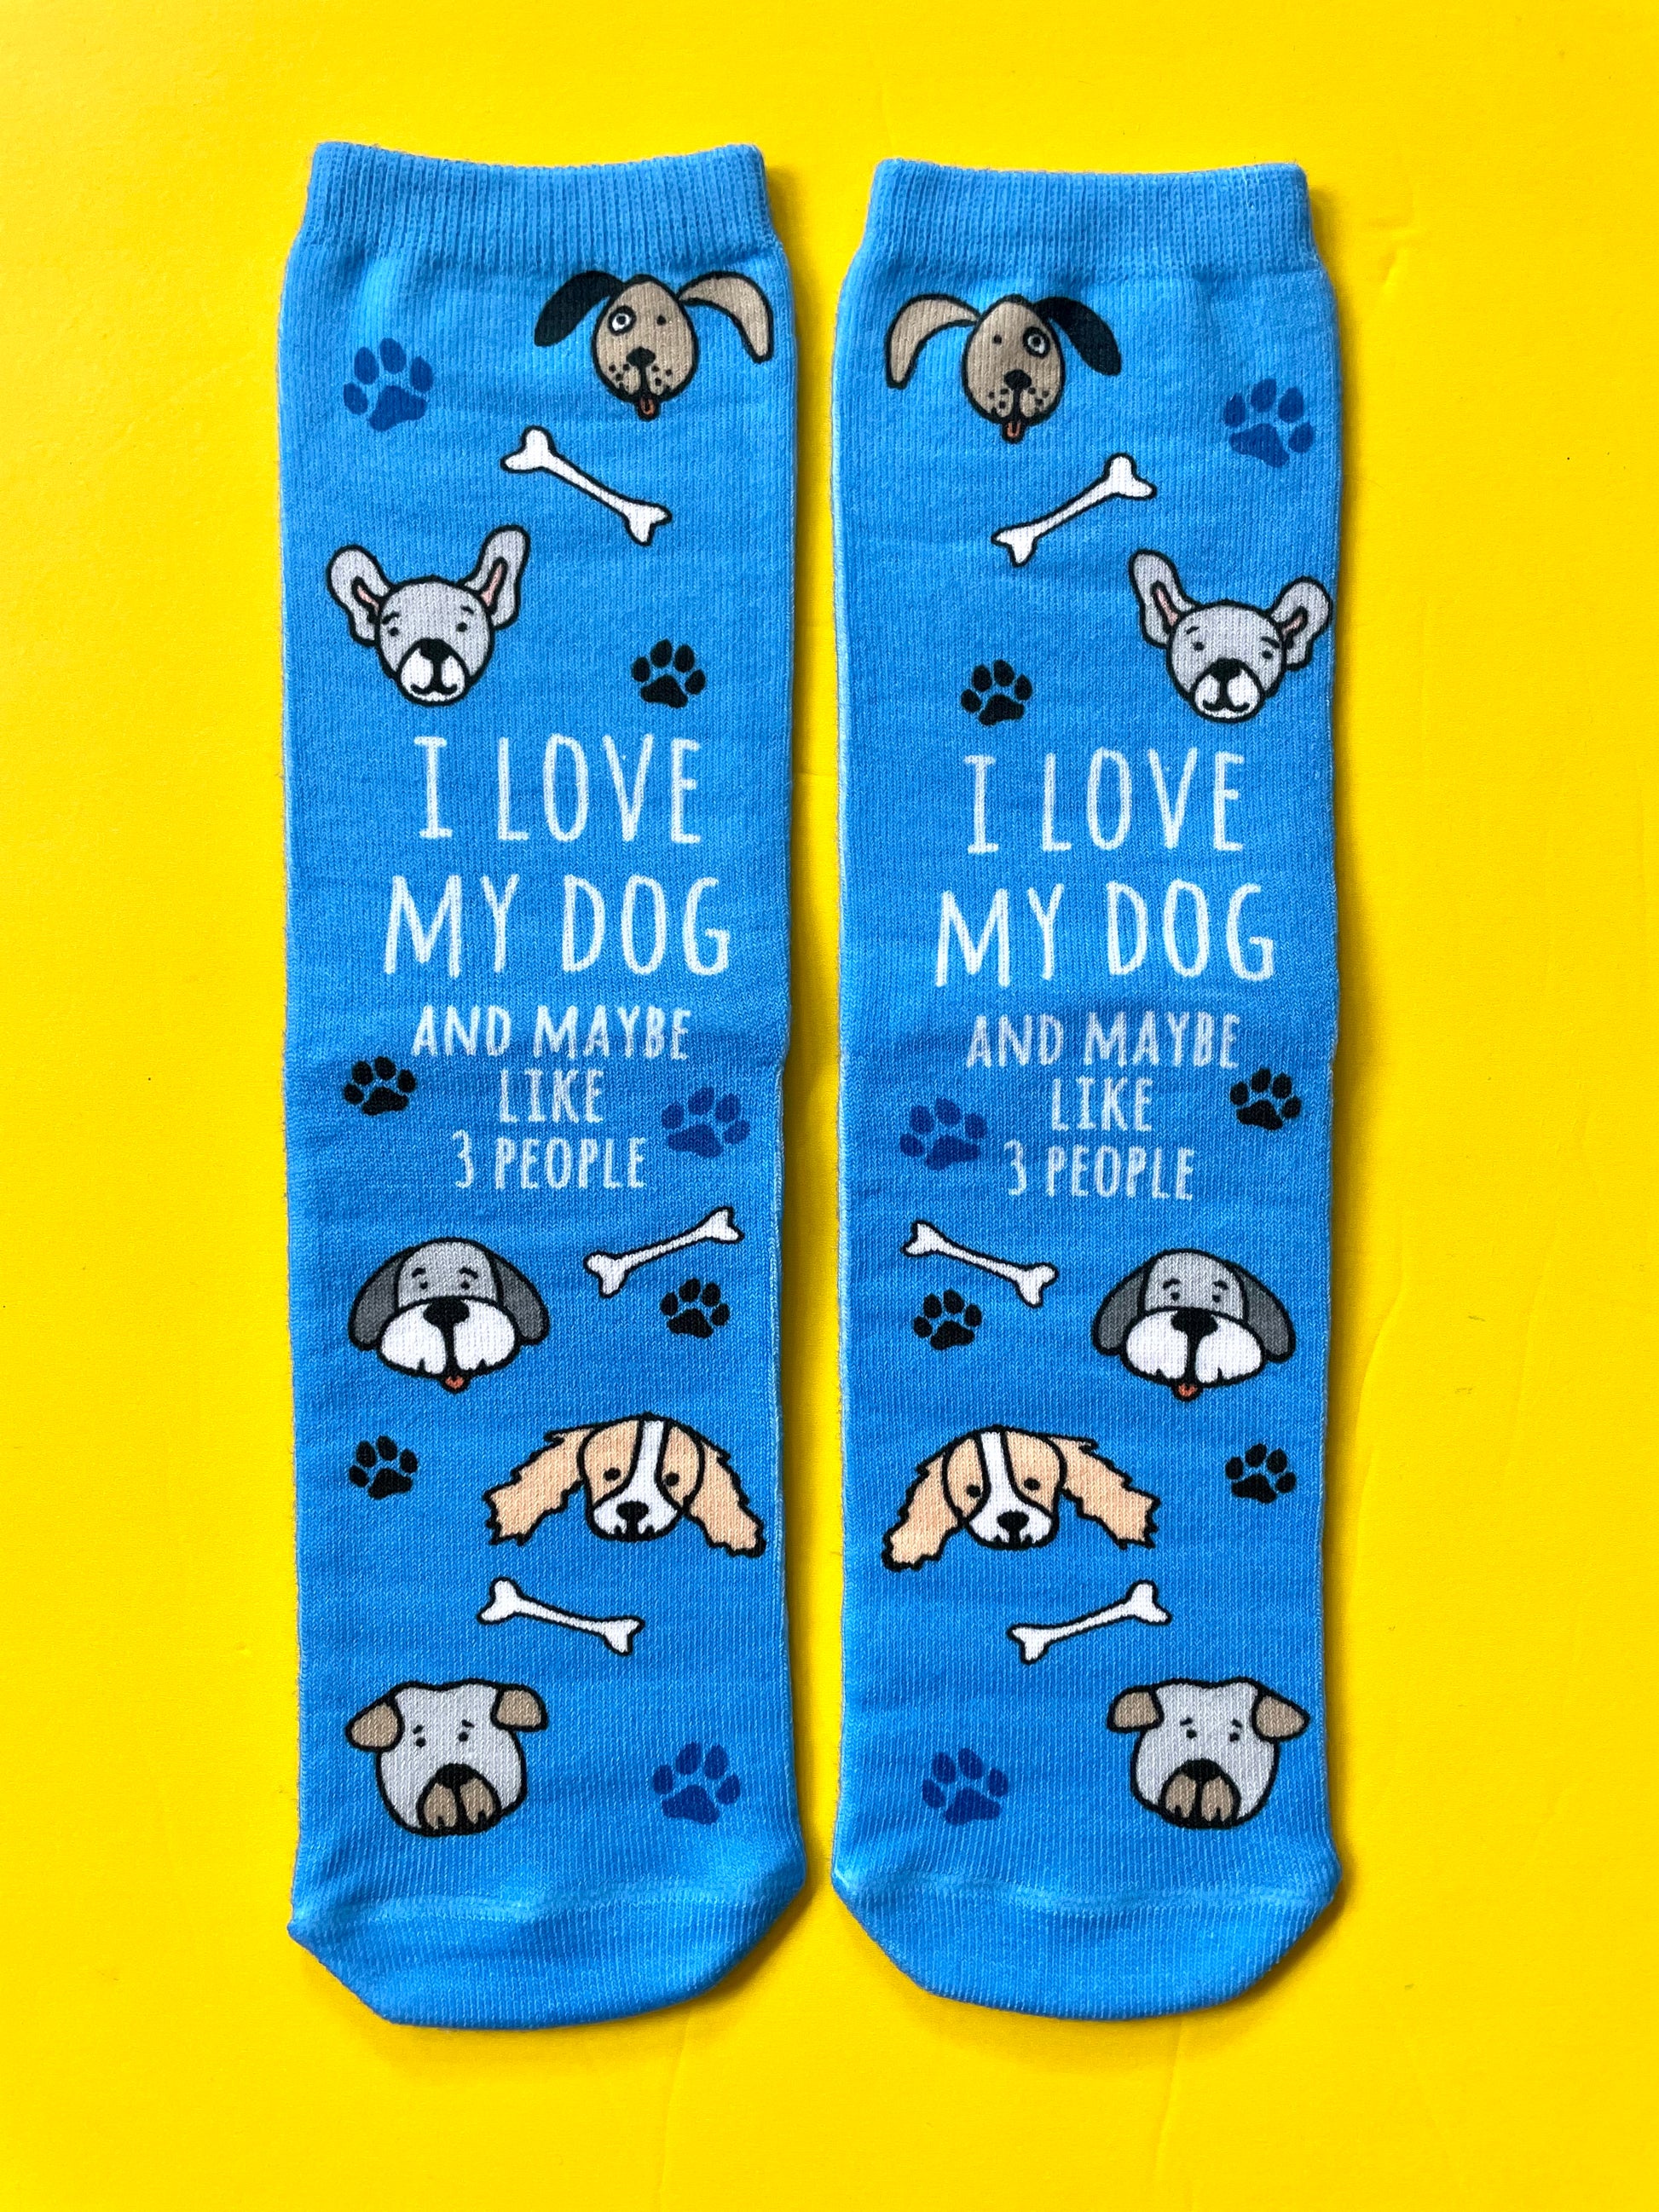 I Love My Dog (And Maybe Like 3 People) - Novelty Socks - MoonlightMakers